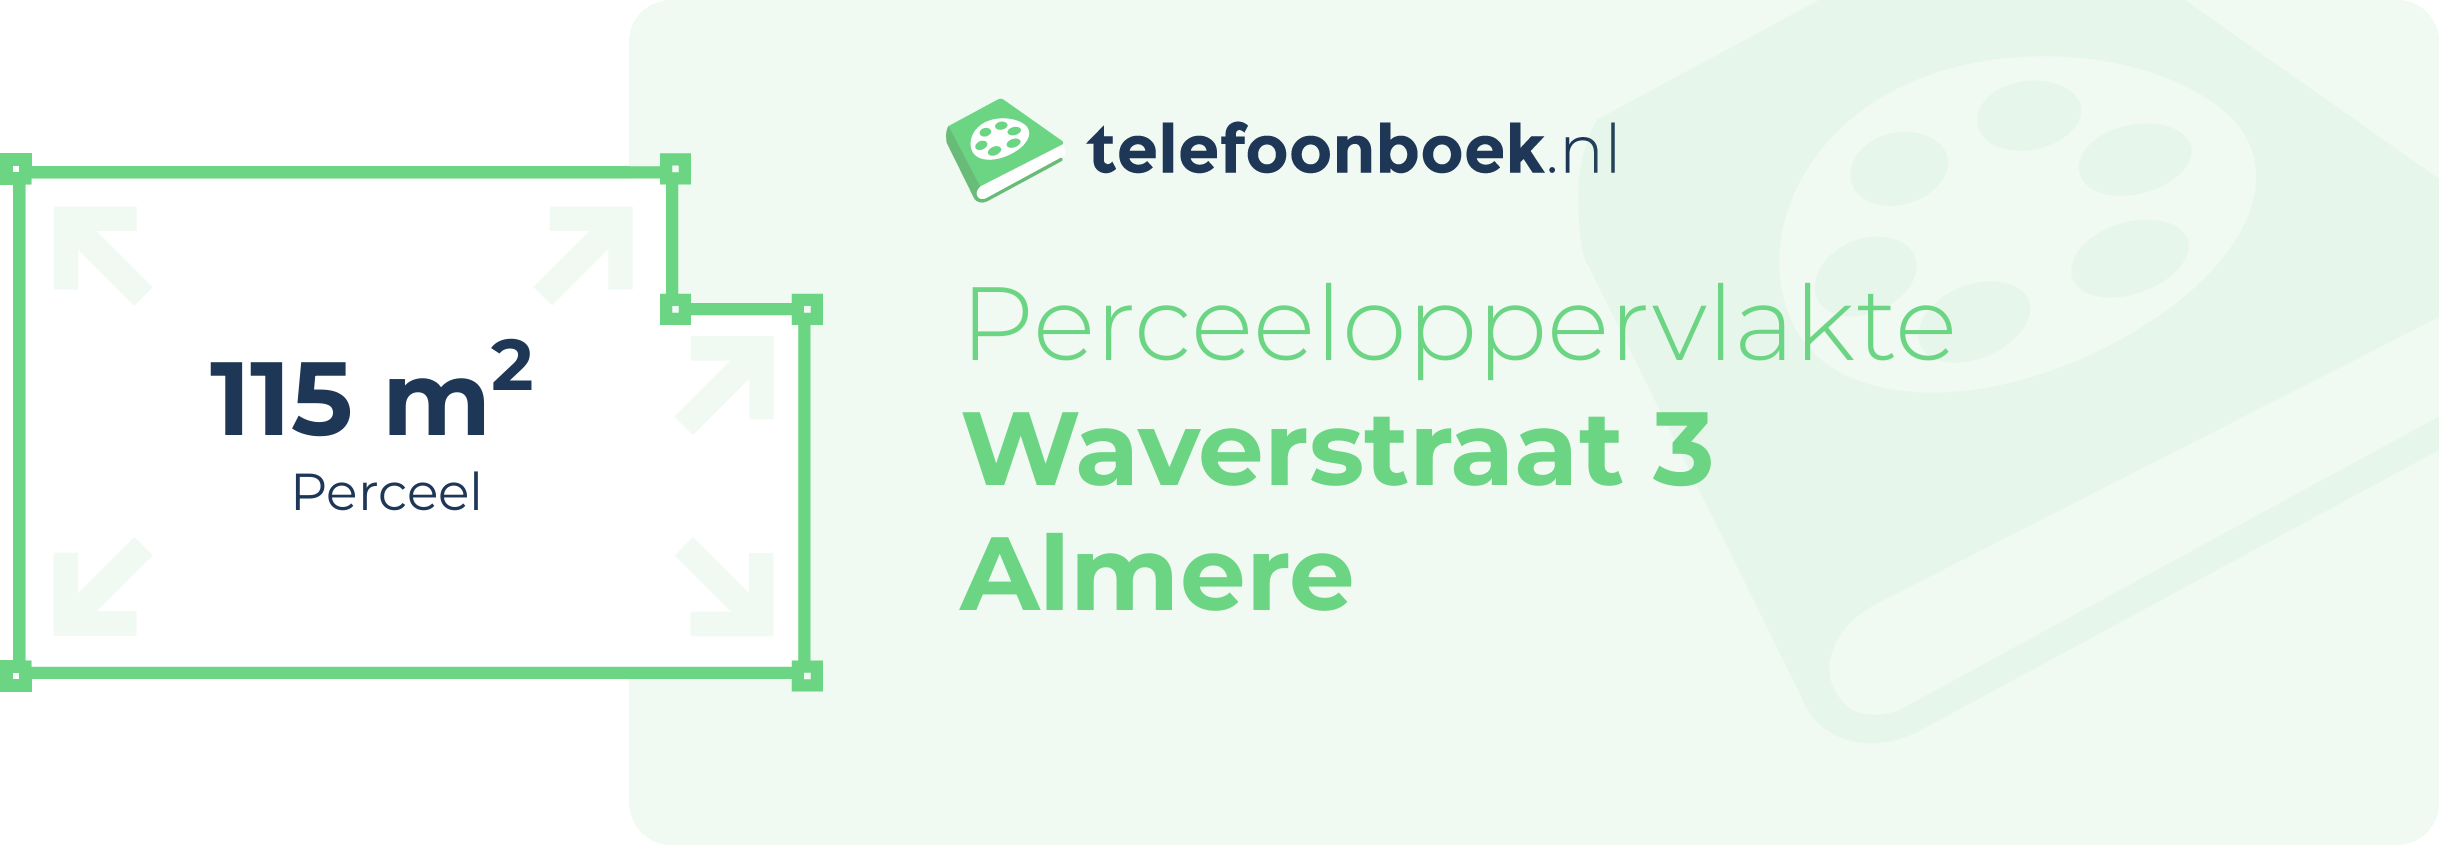 Perceeloppervlakte Waverstraat 3 Almere